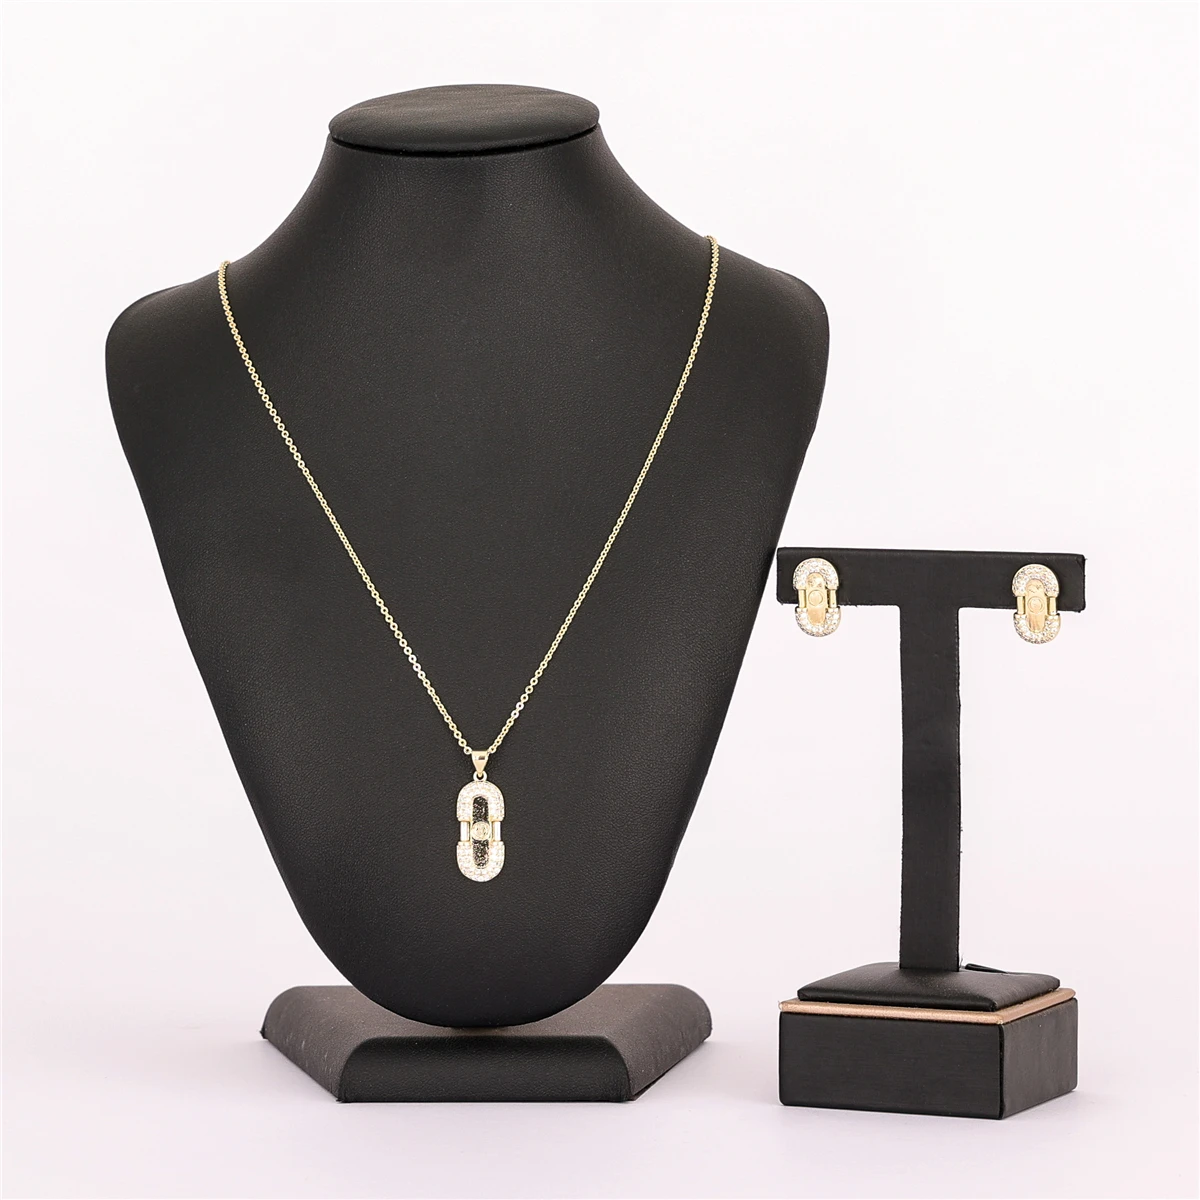 

LUIZADA 2022 Jul Trend of 14k Gold Elegant Chic ModernJewelry Sets for Women Accessories Necklace Earrings